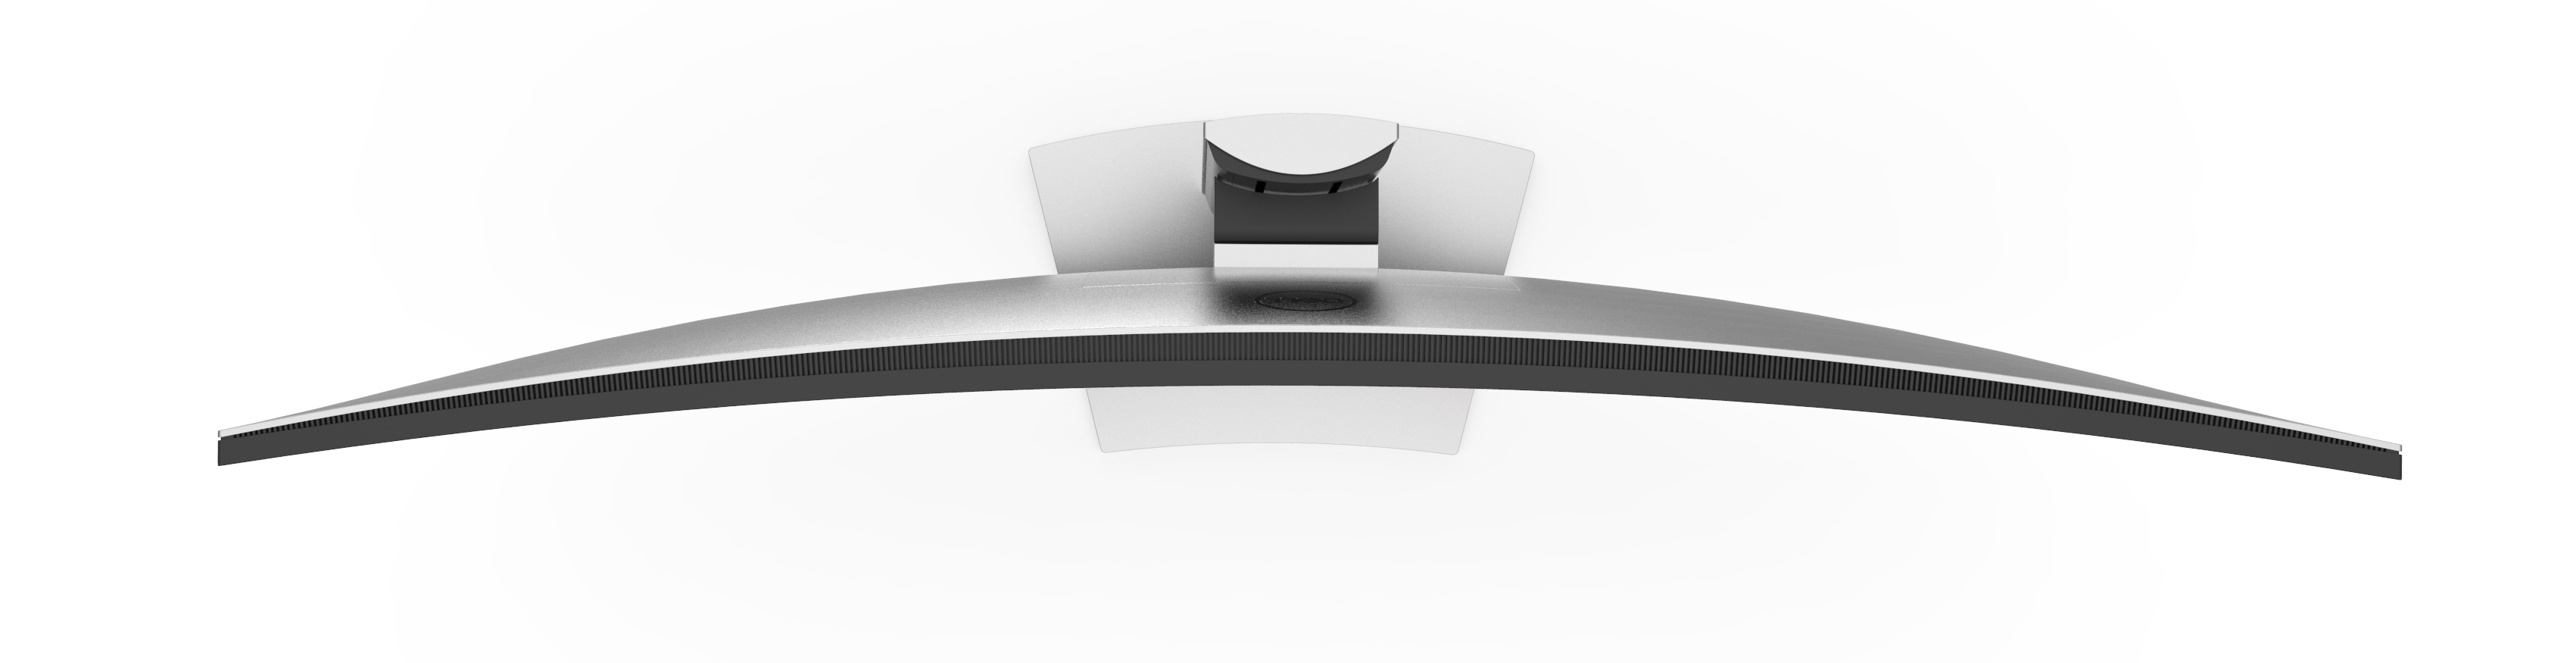 Dell UltraSharp 49 Curved Monitor: U4919DW